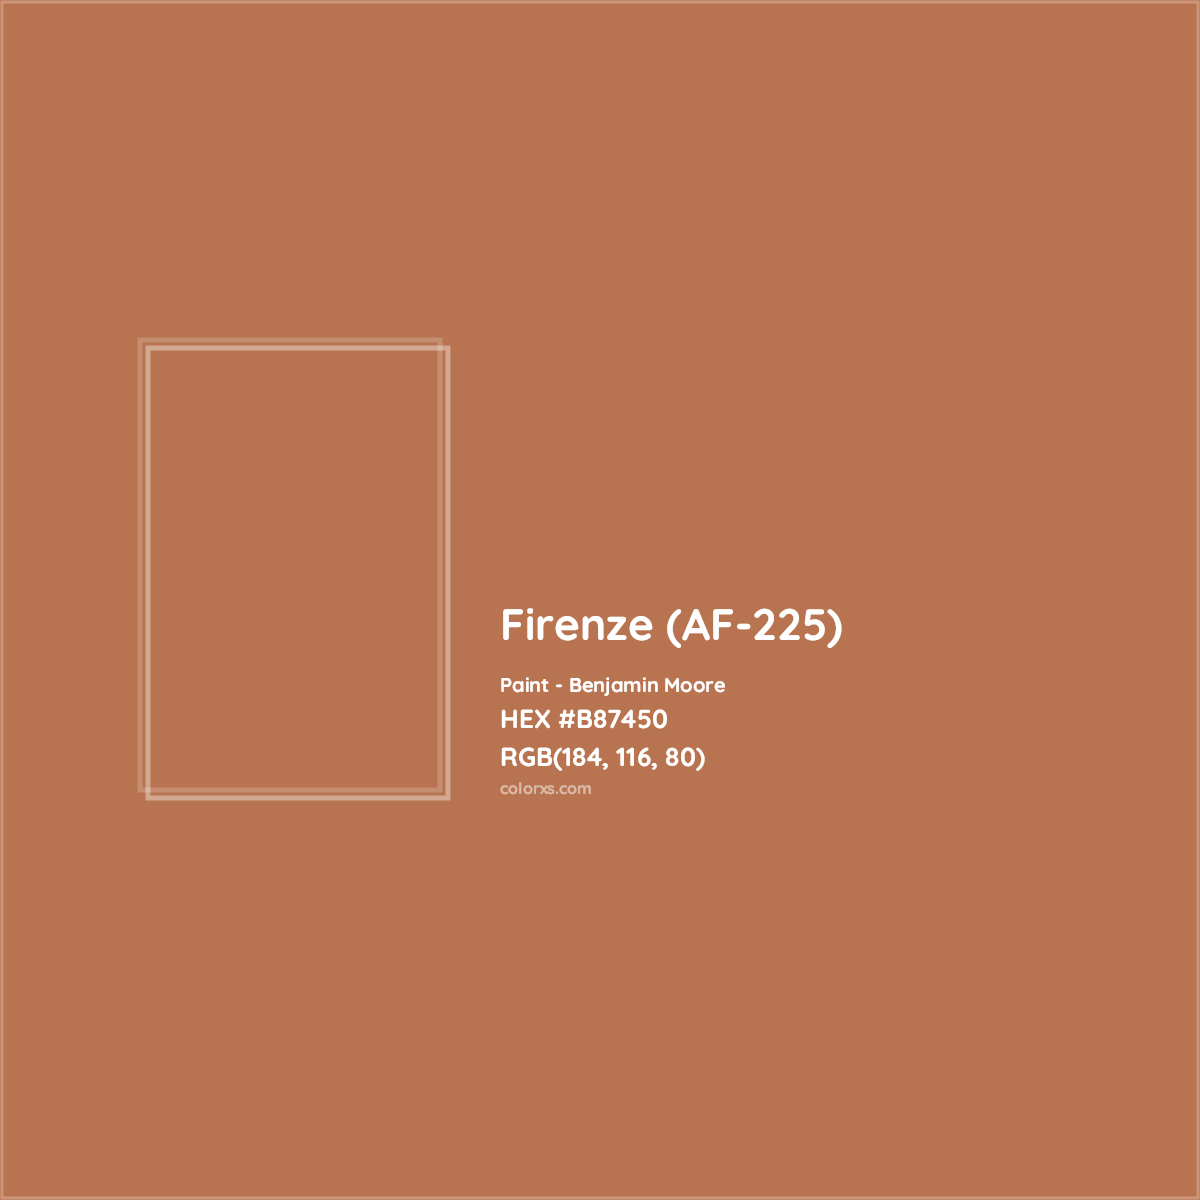 HEX #B87450 Firenze (AF-225) Paint Benjamin Moore - Color Code